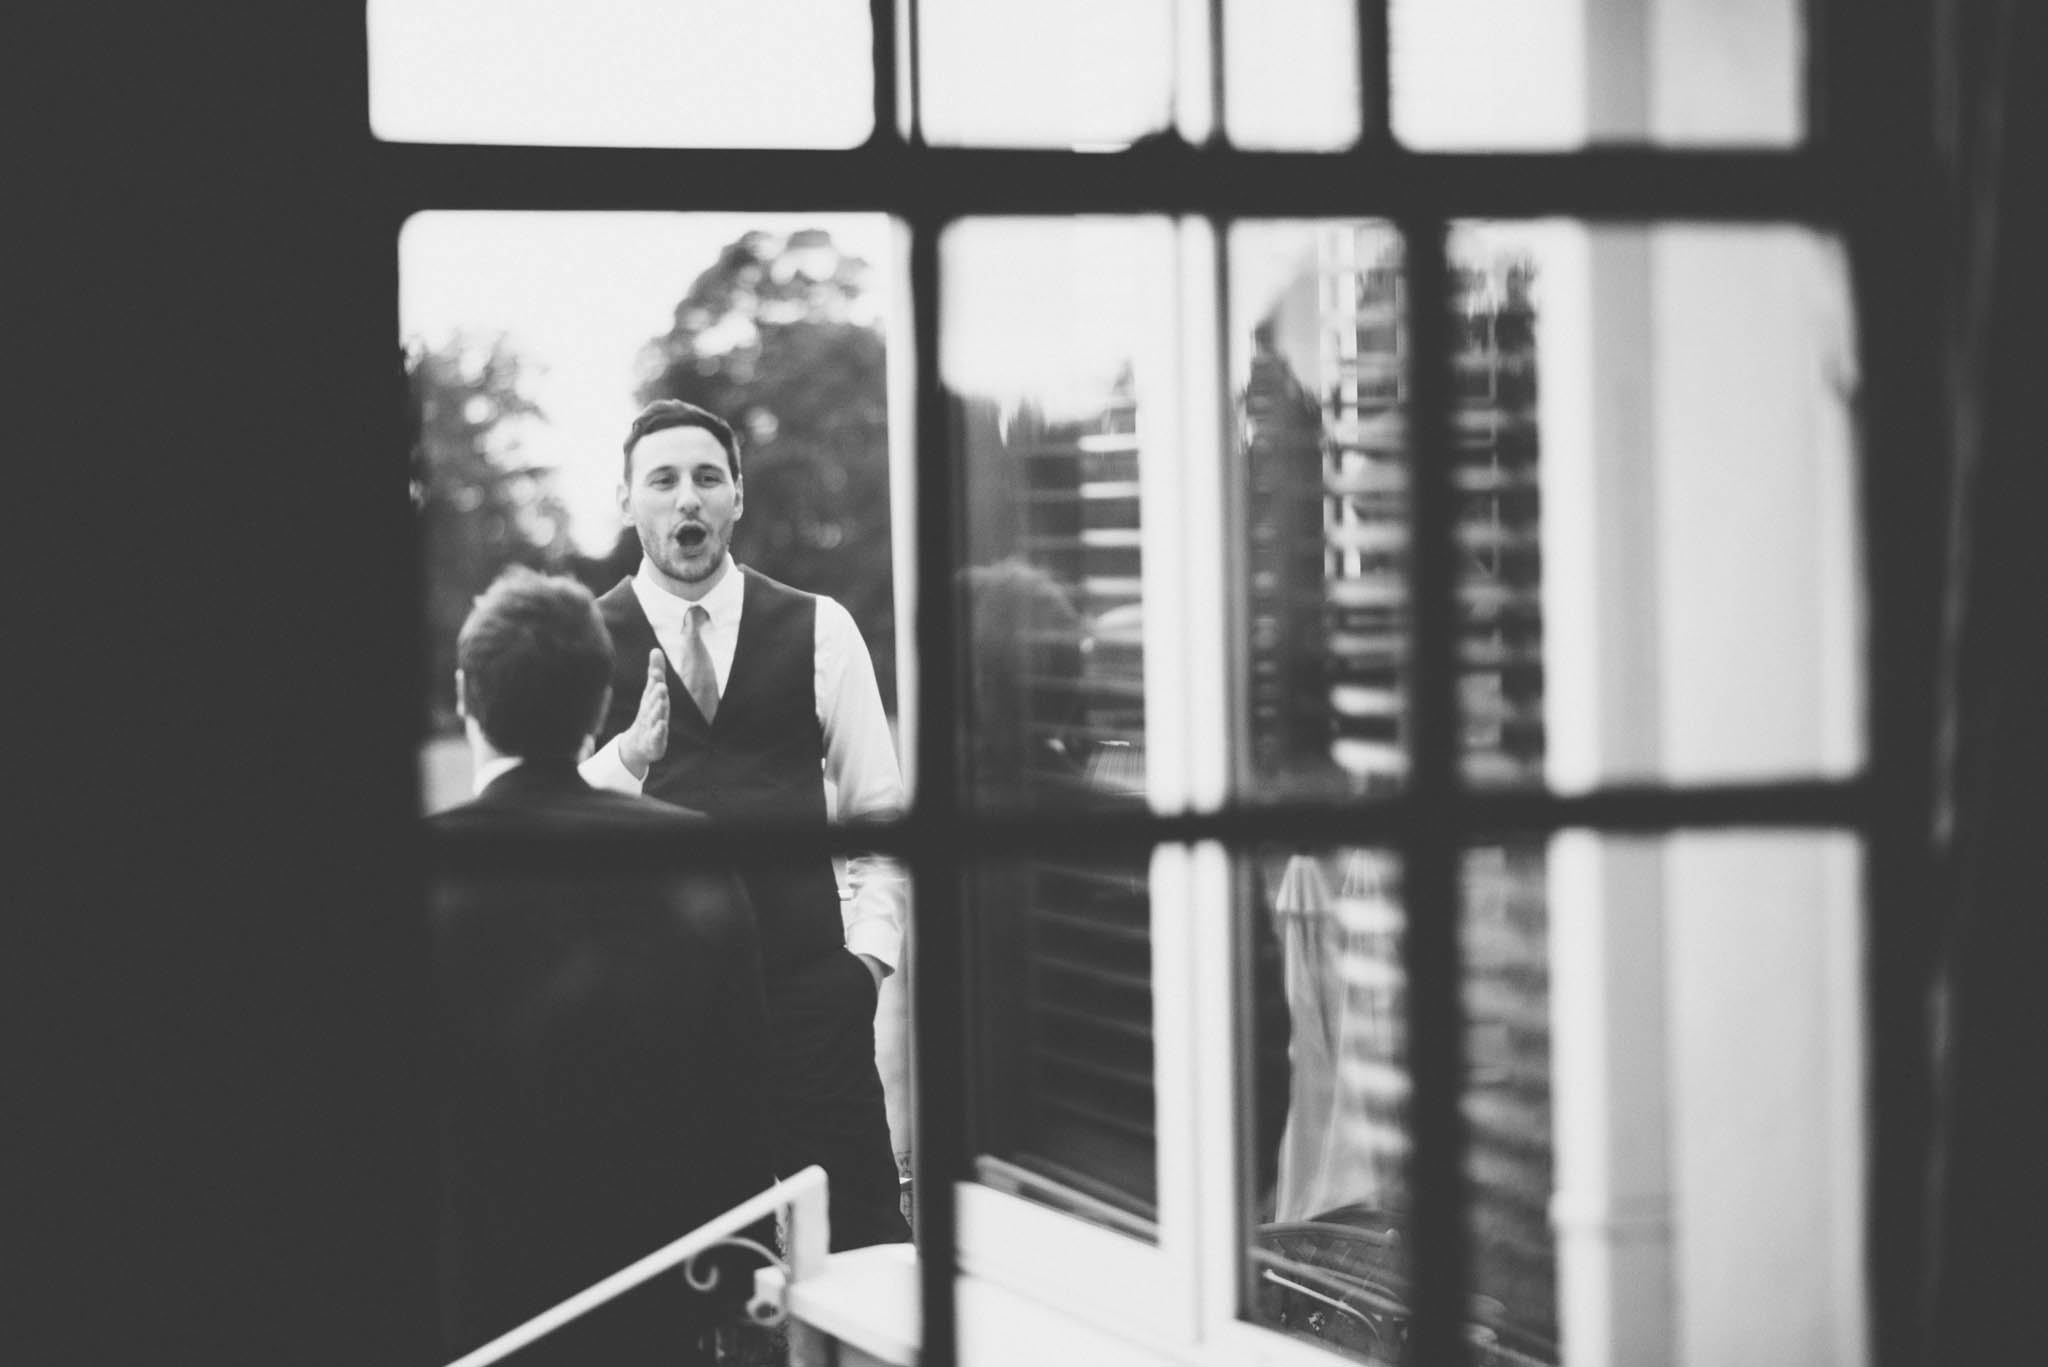 through-window-wedding-blog-scott-stockwell-photography-end-2017.jpg